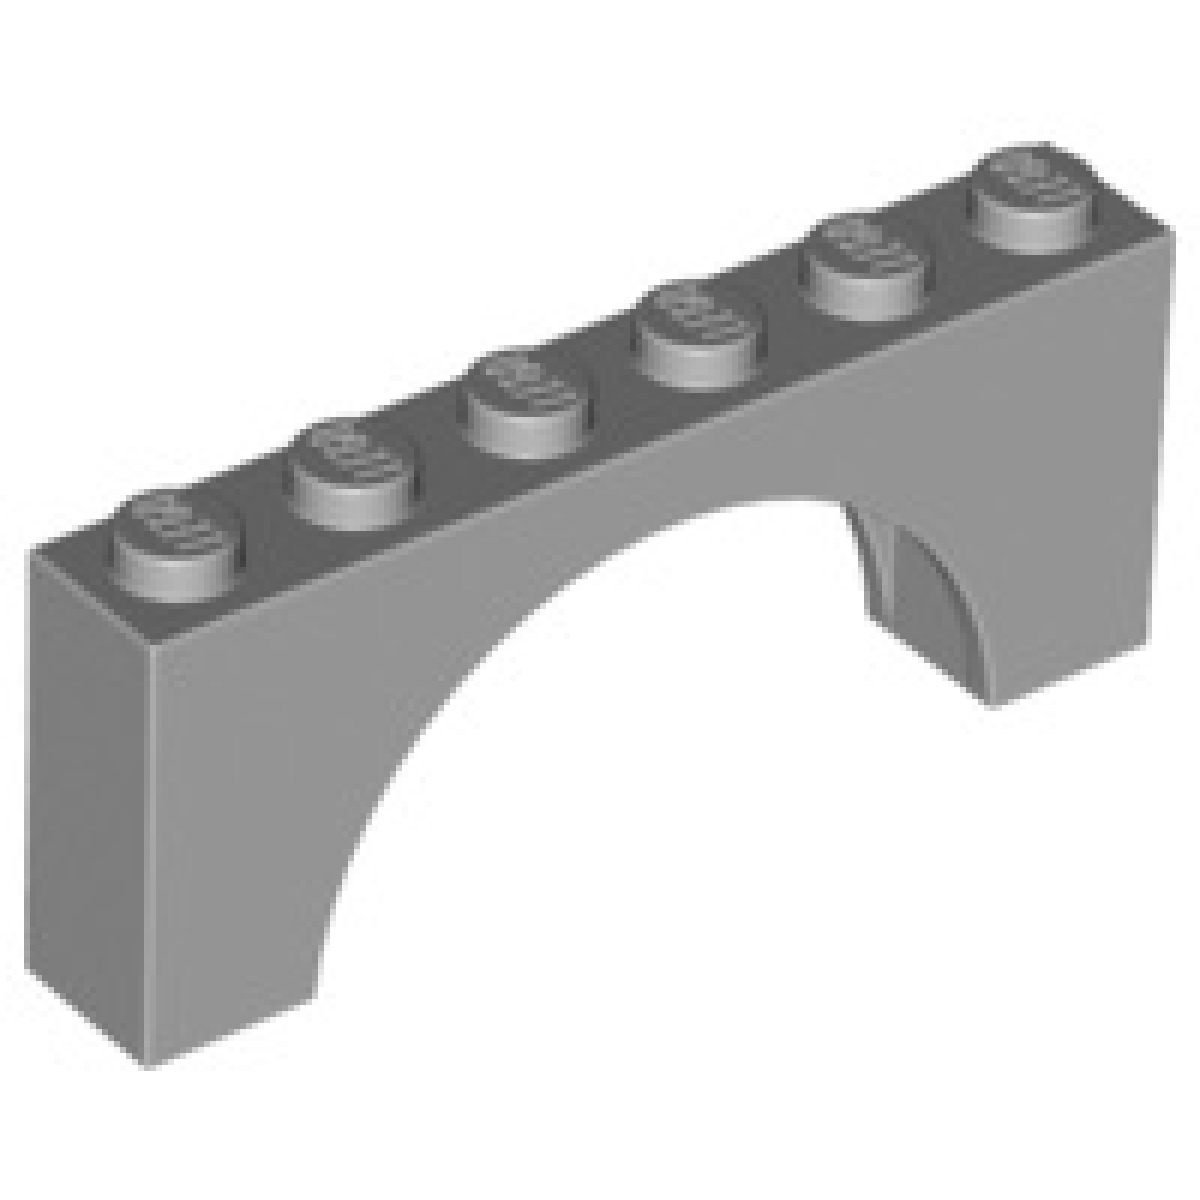 15 NEW LEGO Brick Arch 1 x 5 x 4 Continuous Bow BRICKS Black